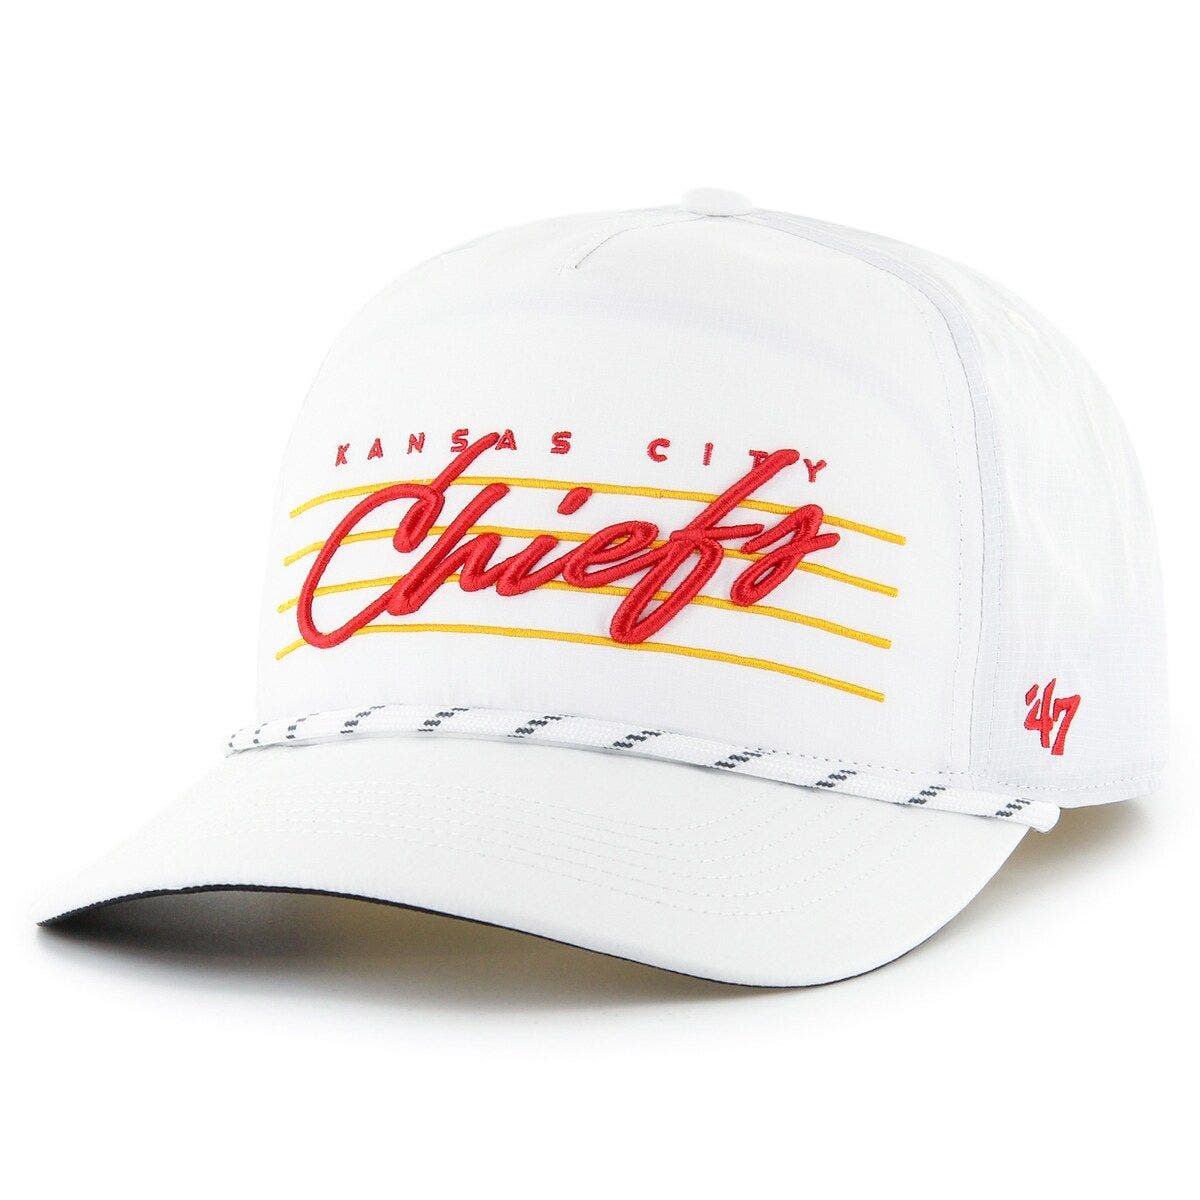 Washington Capitals '47 Downburst Hitch Snapback Hat - White